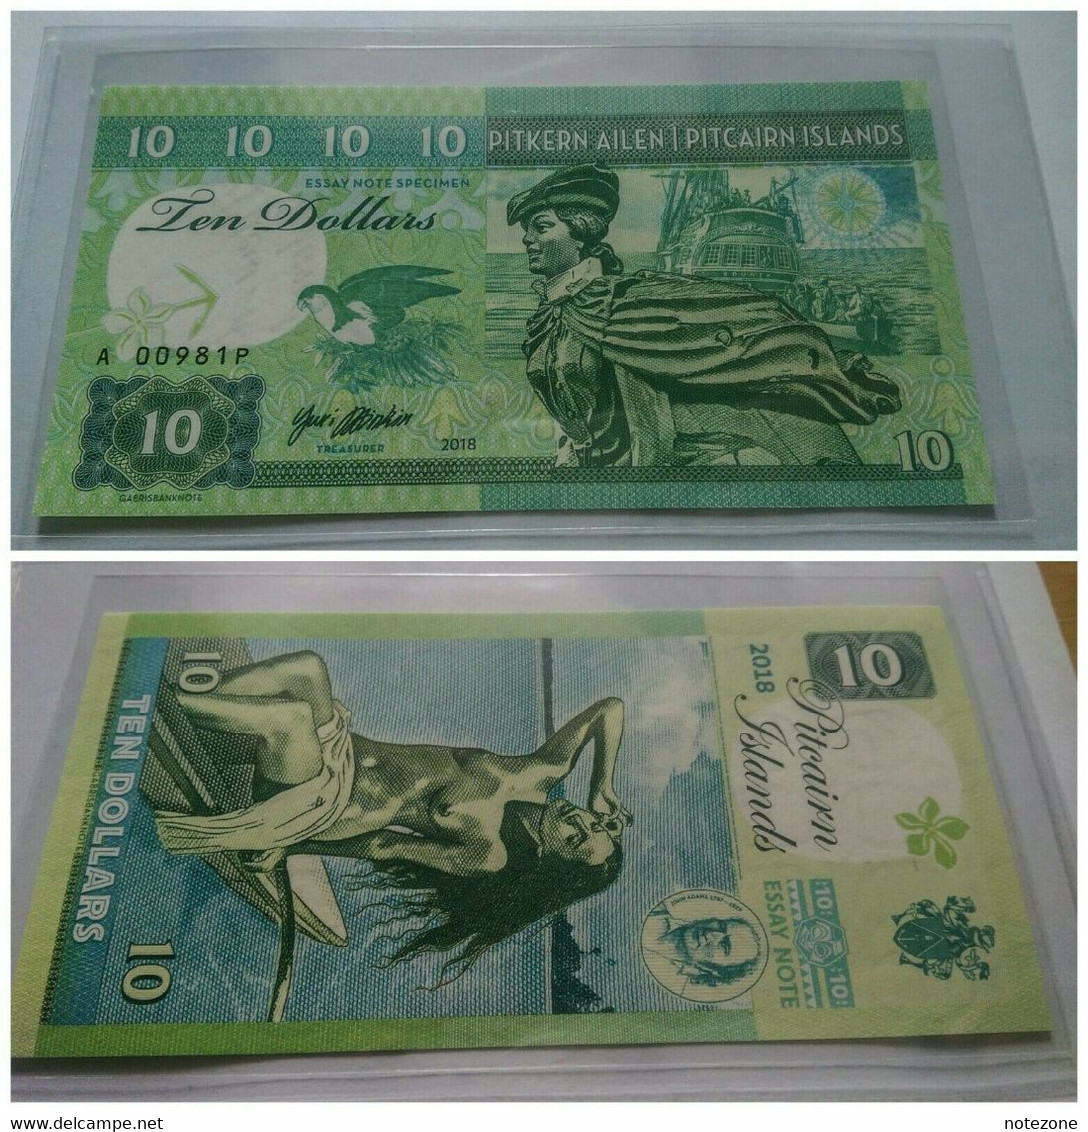 Matej Gabris $10 Pitcairn Islands Banknote Private Fantasy Test - Verzameleeksen